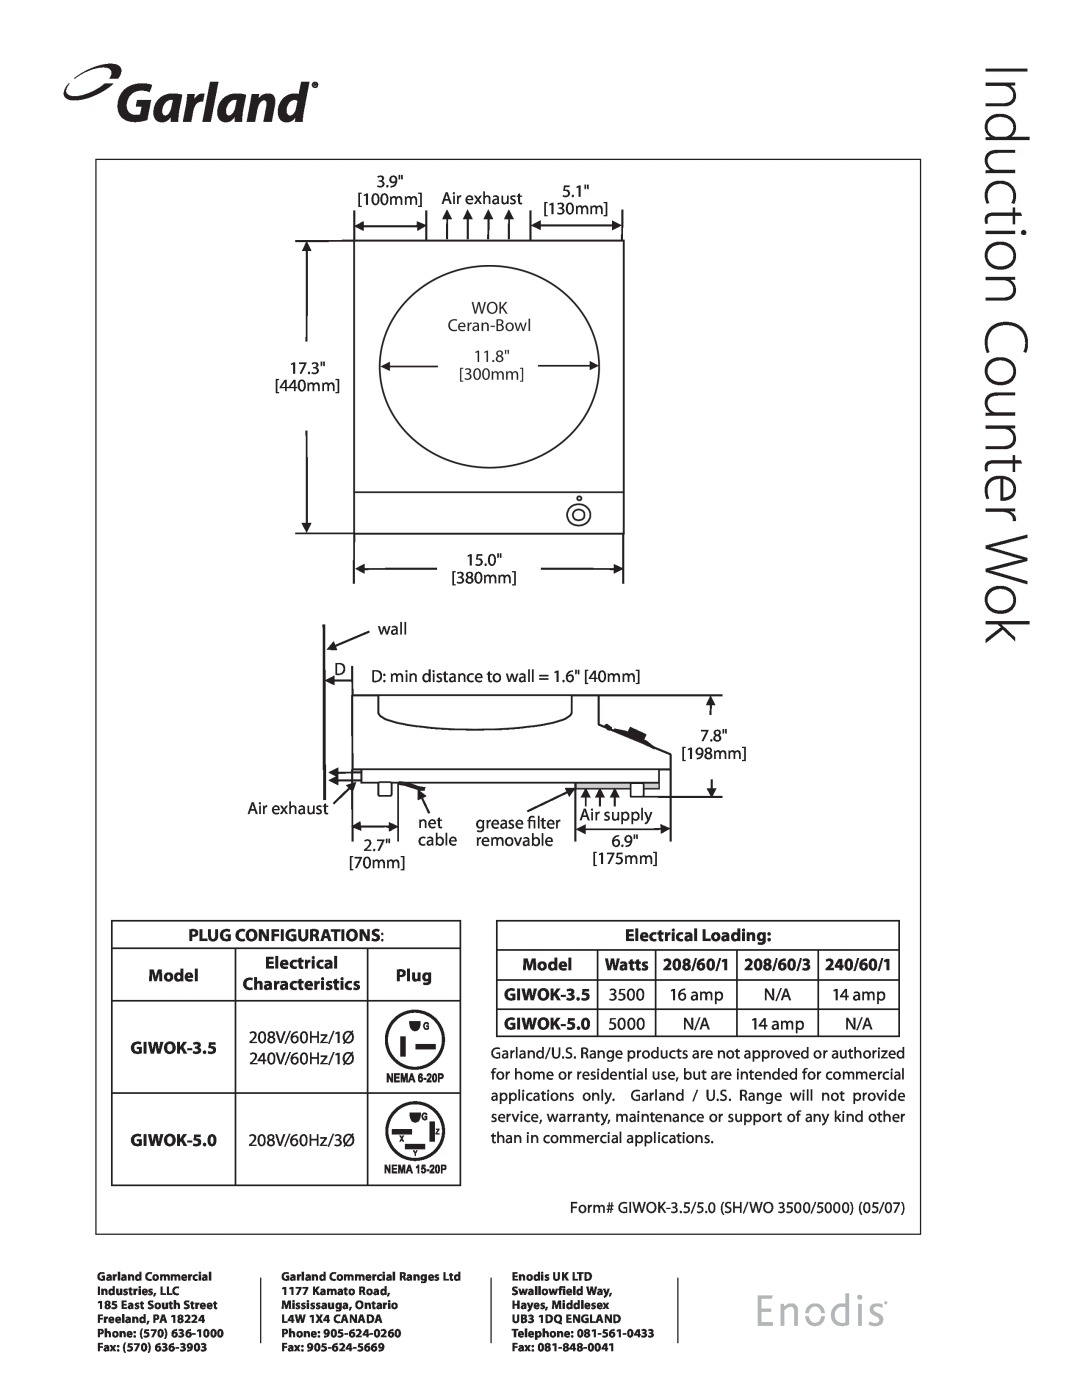 Garland GIWOK-3.5 (SH/WO 3500), GIWOK-5.0 (SH/WO 5000) specifications Induction Counter Wok 